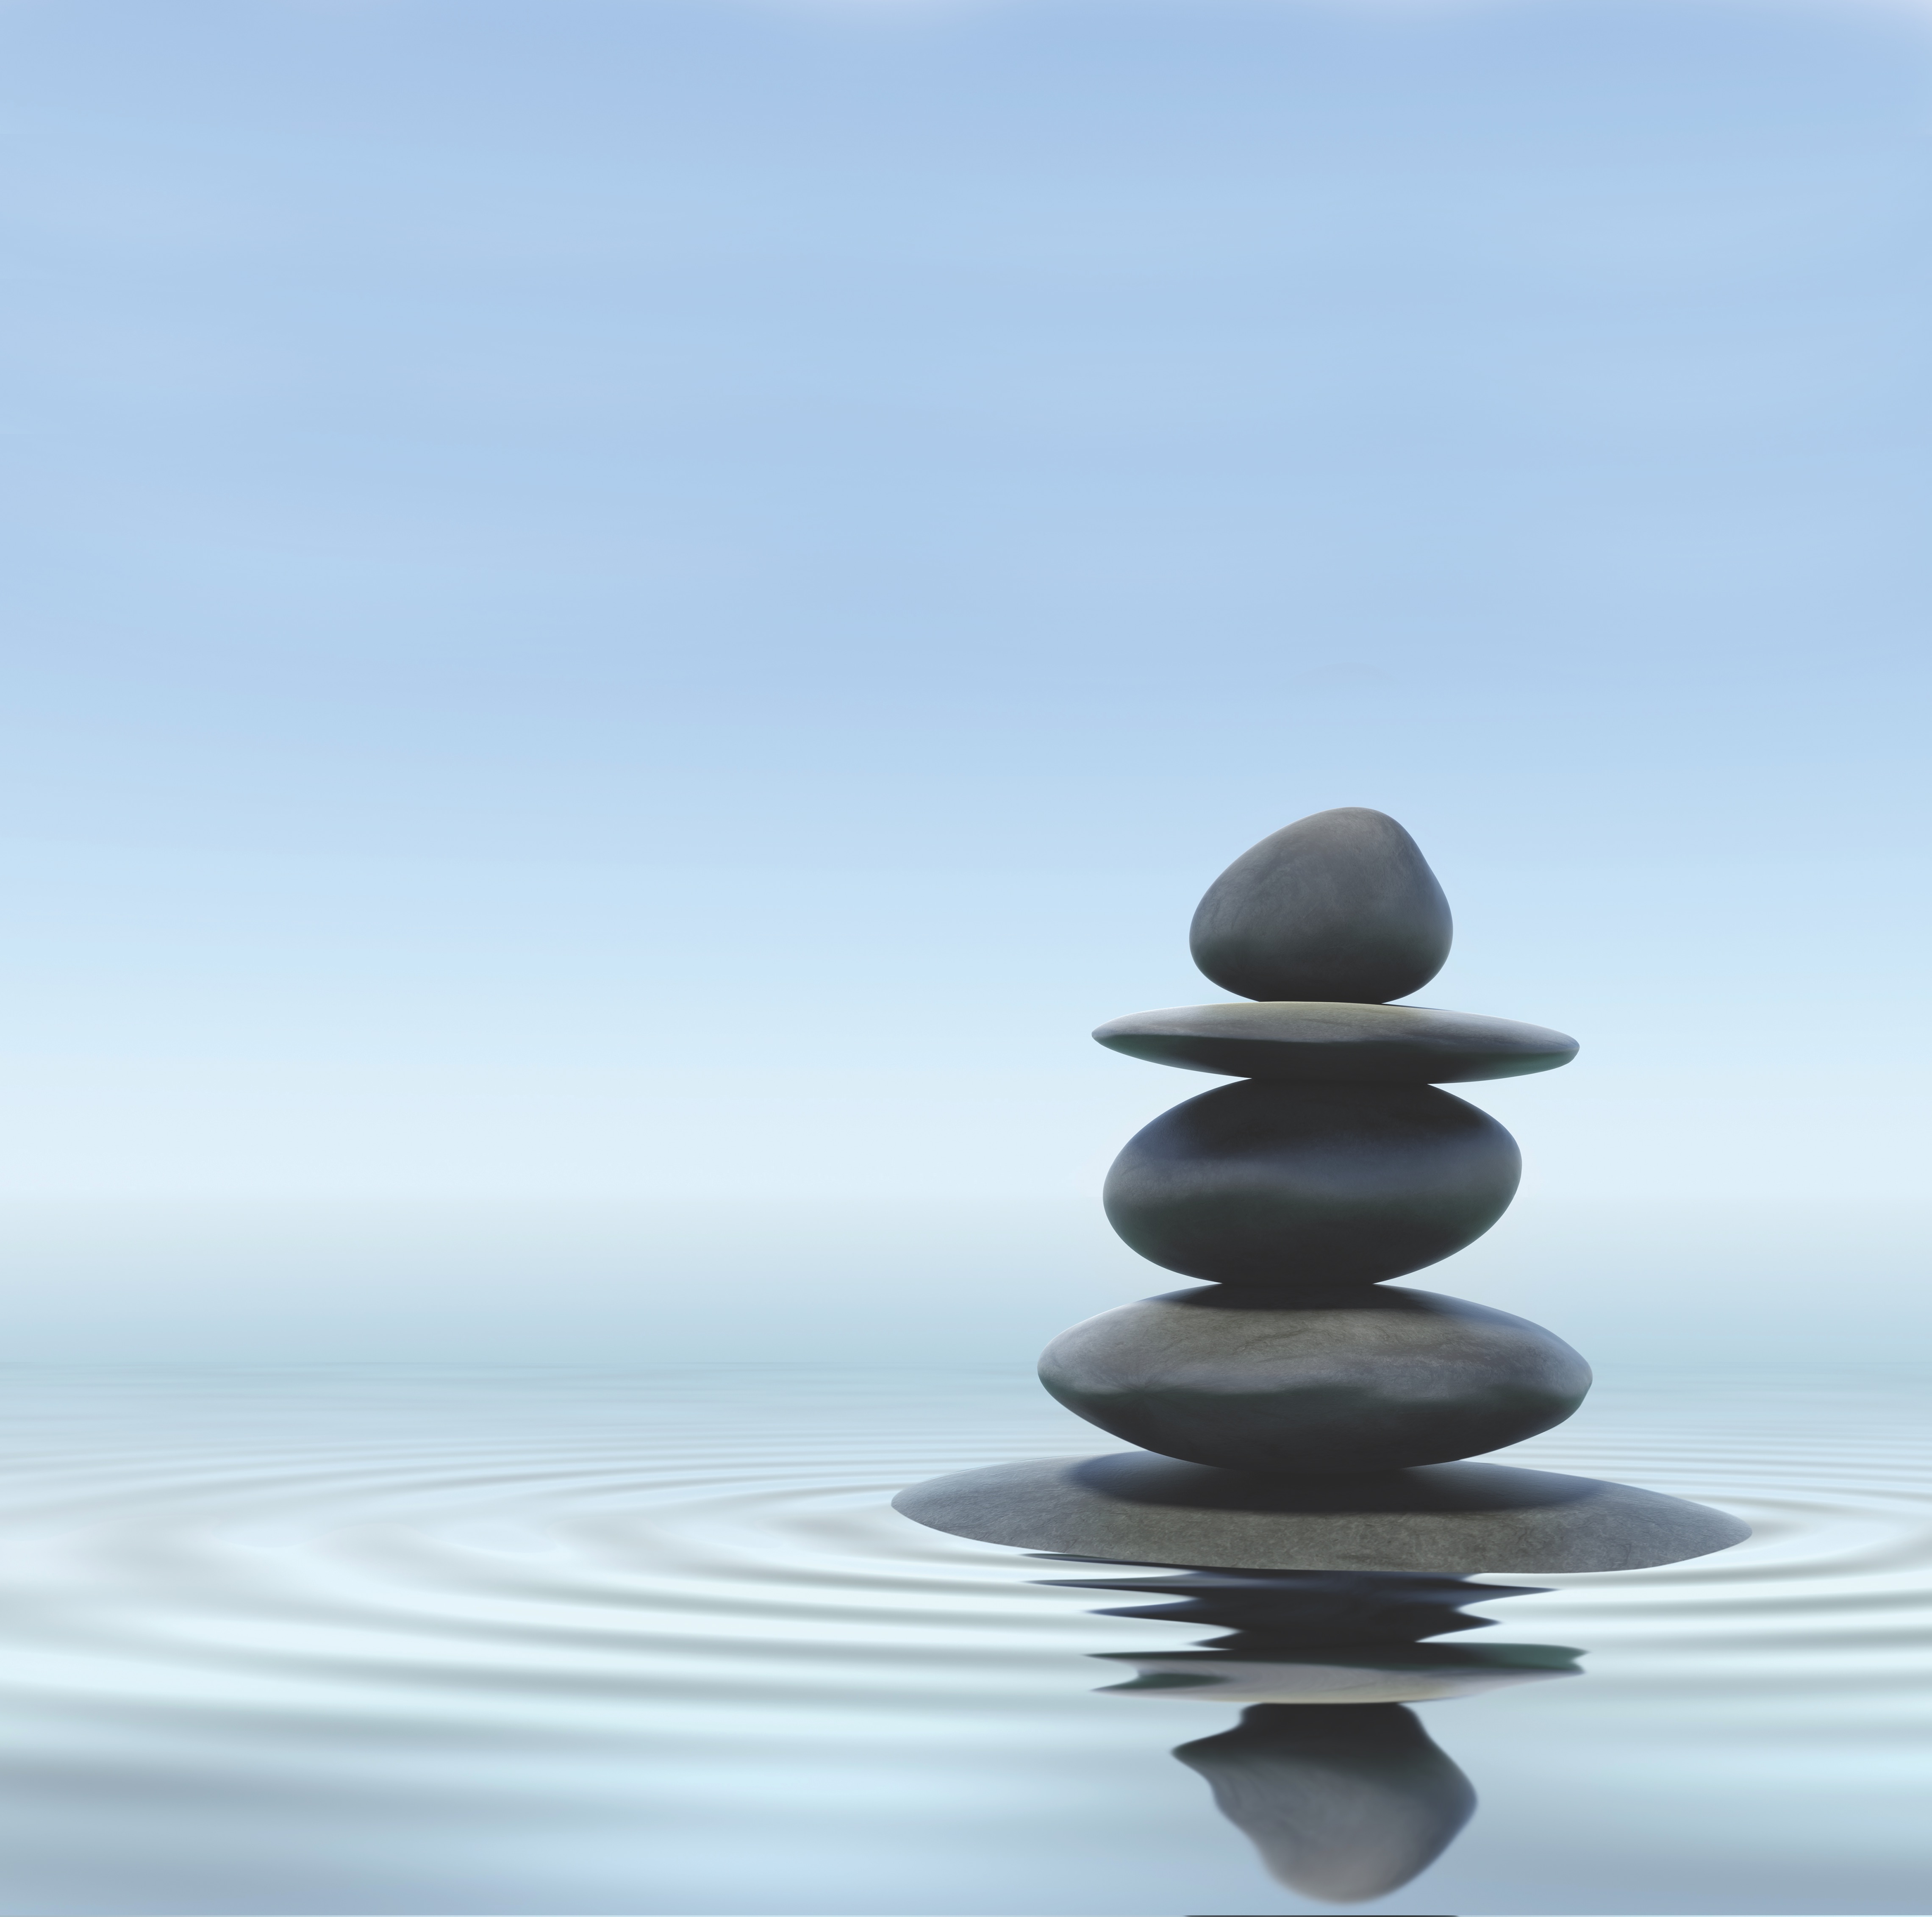 How Judaism Helps Us Regain Our Balance